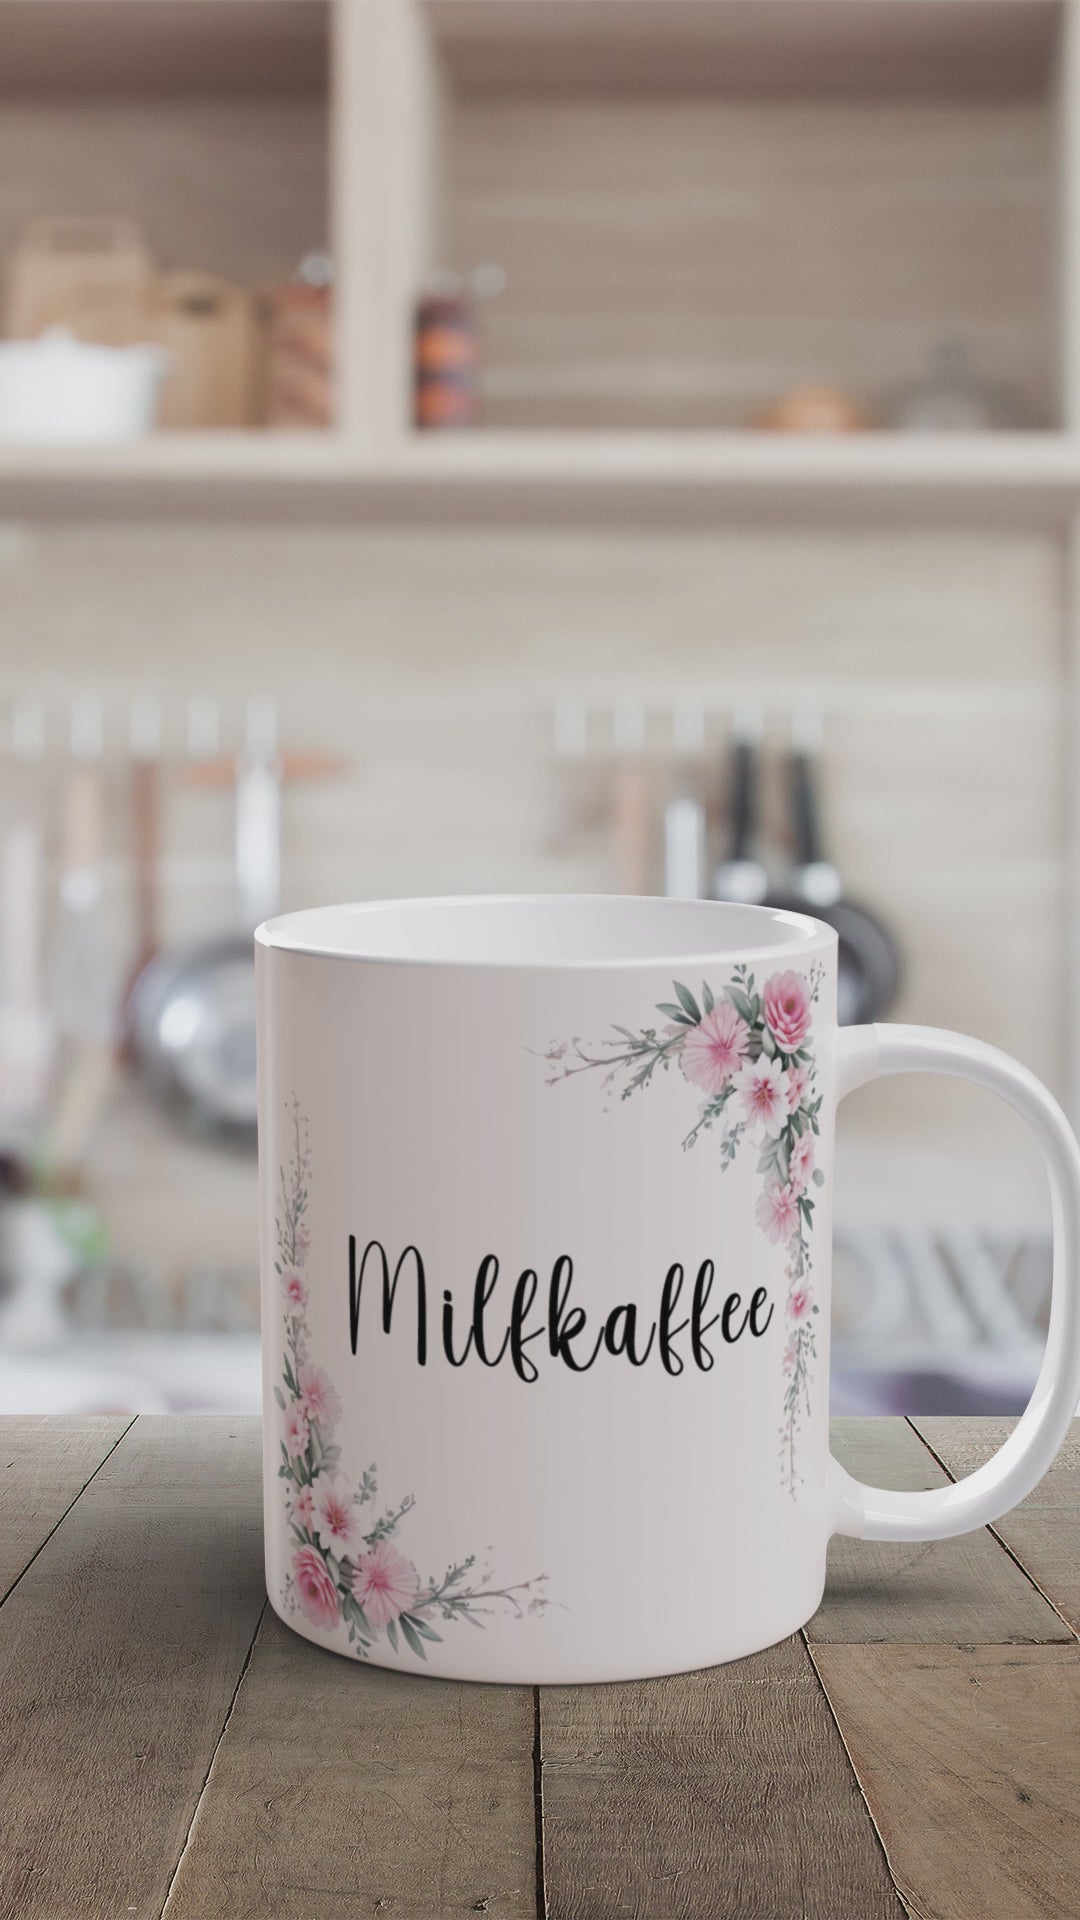 Milfkaffee: Keramik-Kaffeebecher – Humorvoll & Hochwertig